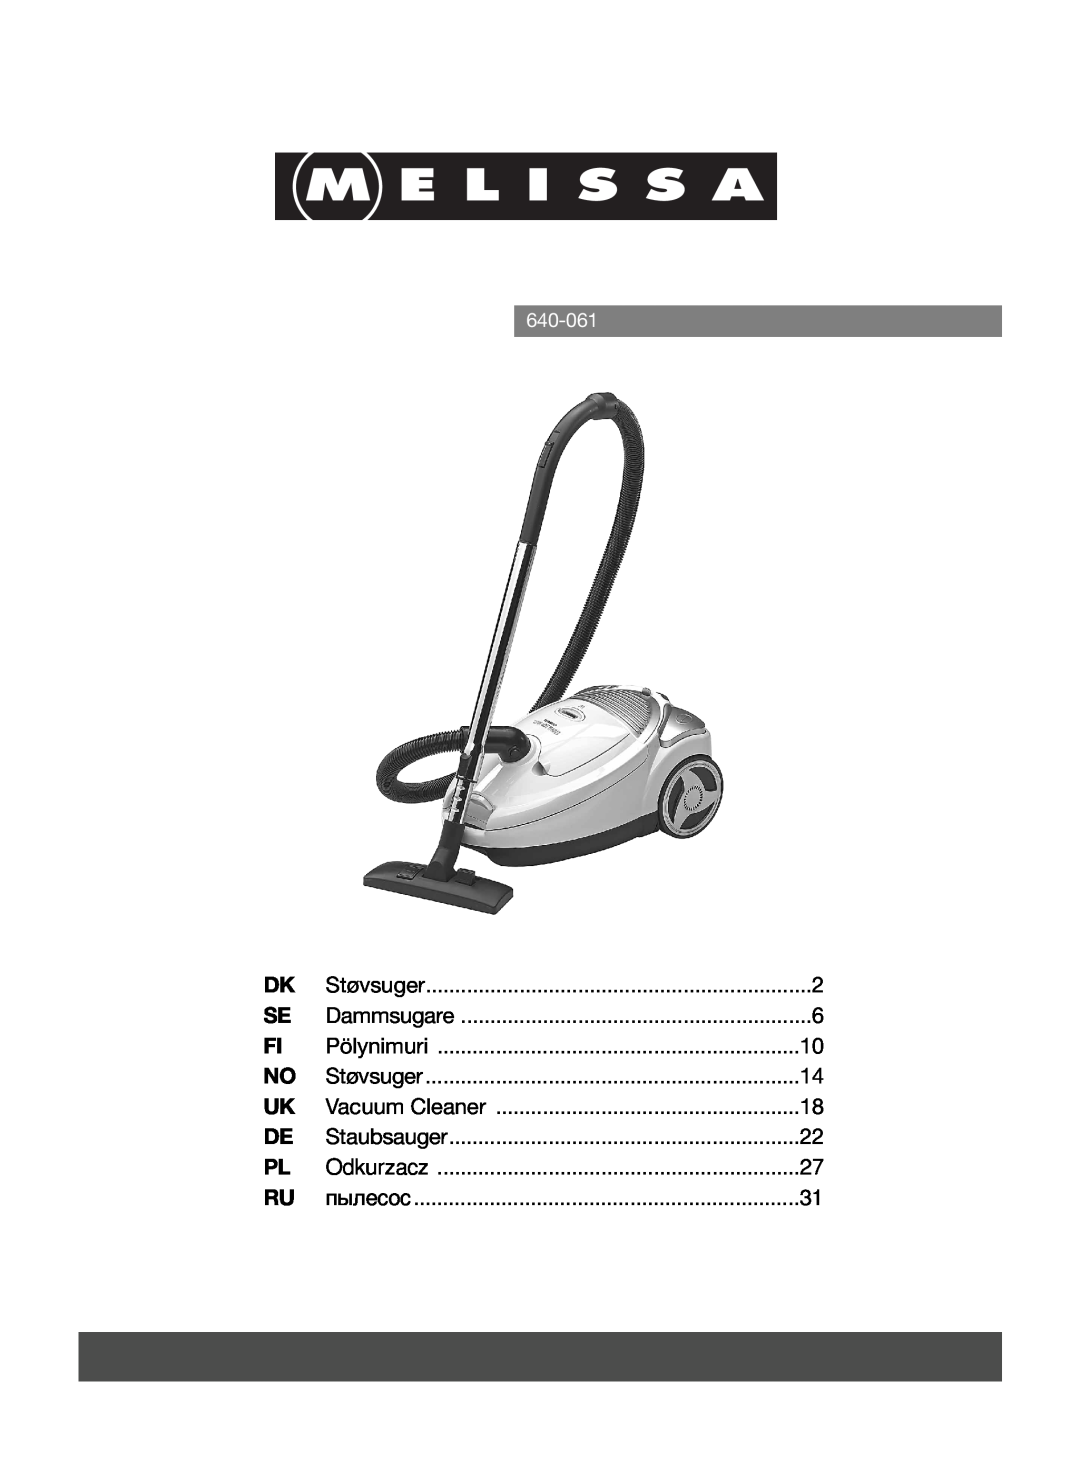 Melissa 640-061 manual Støvsuger, Dammsugare, Pölynimuri, Vacuum Cleaner, Staubsauger, Odkurzacz, пылесос 